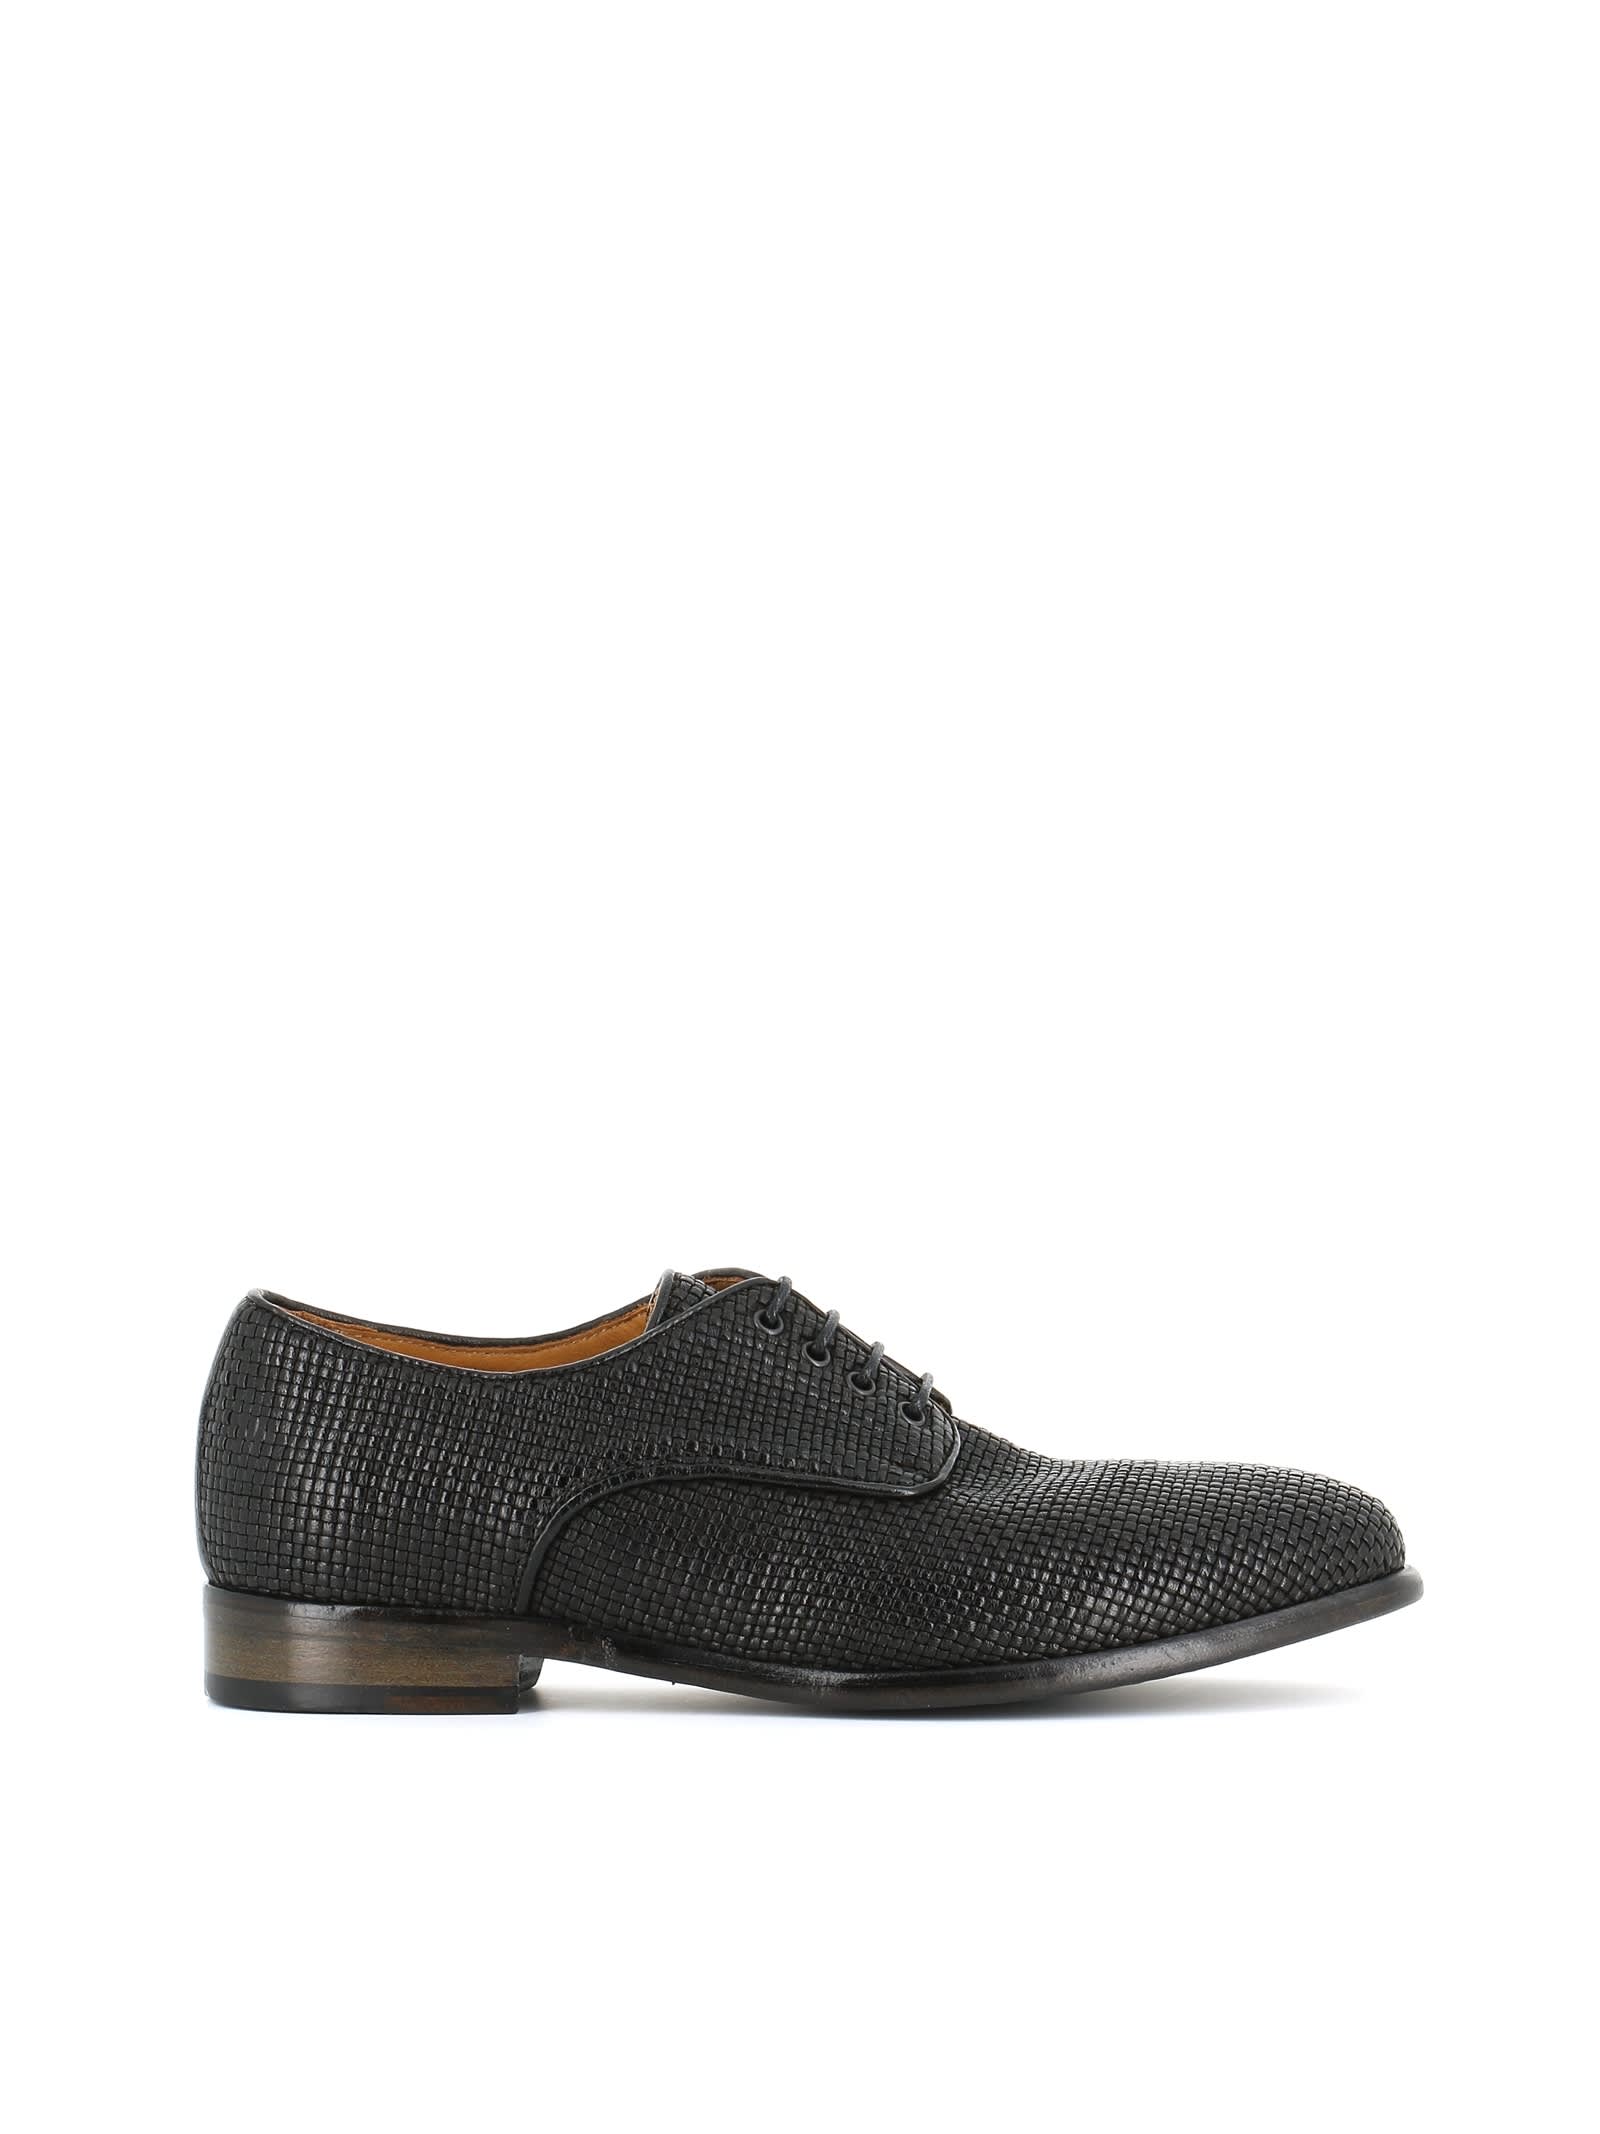 Sturlini Derby Shoes 8488 In Black